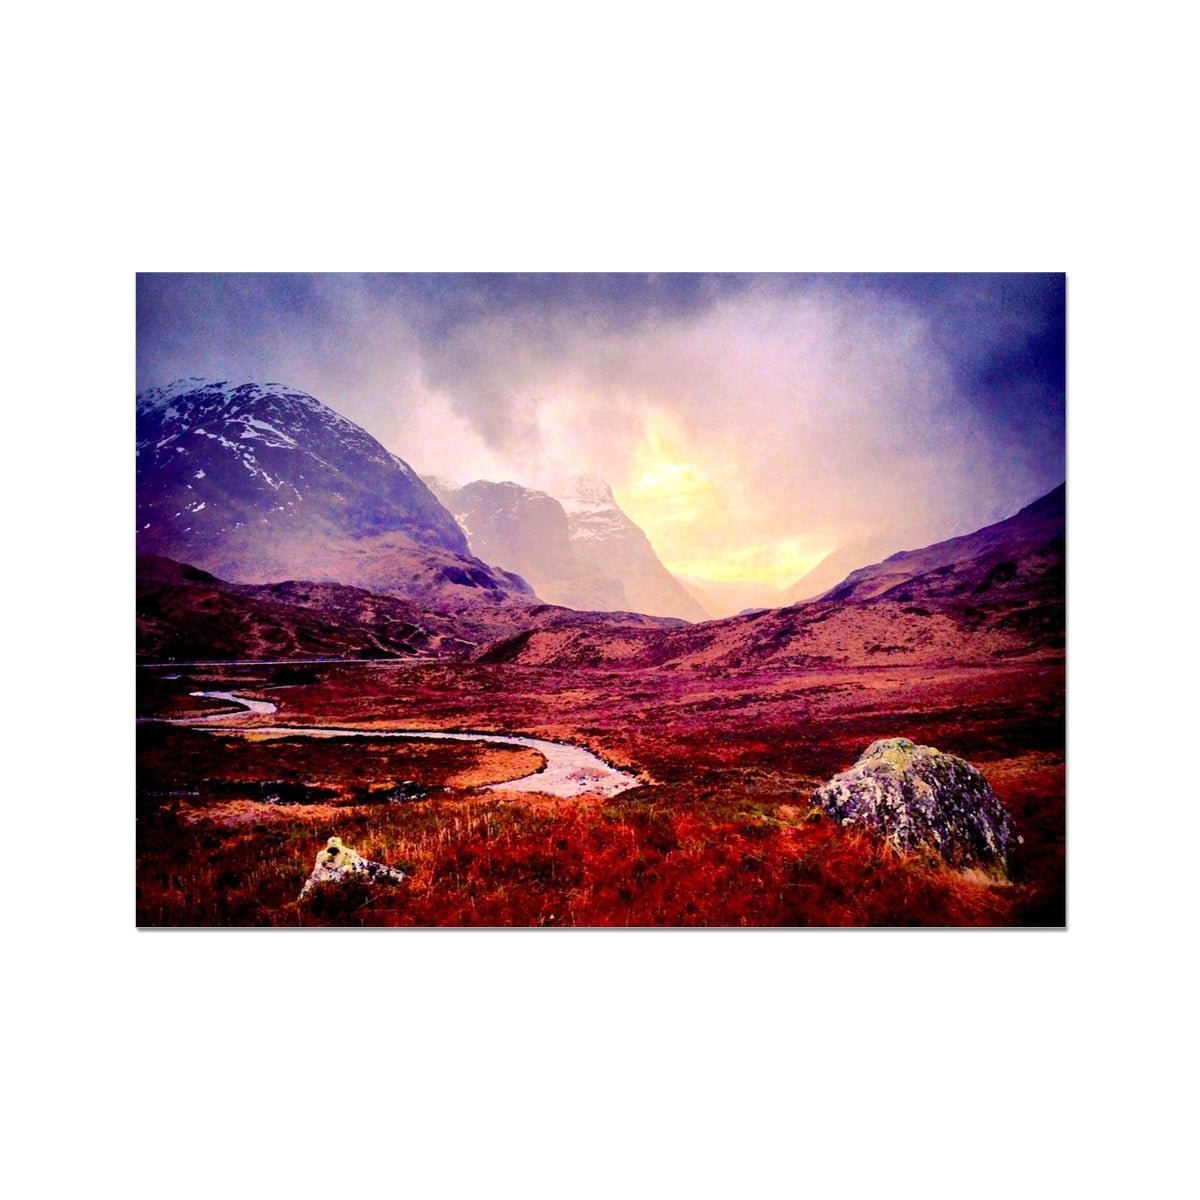 A Brooding Glencoe Painting | Fine Art Prints From Scotland-Unframed Prints-Glencoe Art Gallery-A2 Landscape-Paintings, Prints, Homeware, Art Gifts From Scotland By Scottish Artist Kevin Hunter